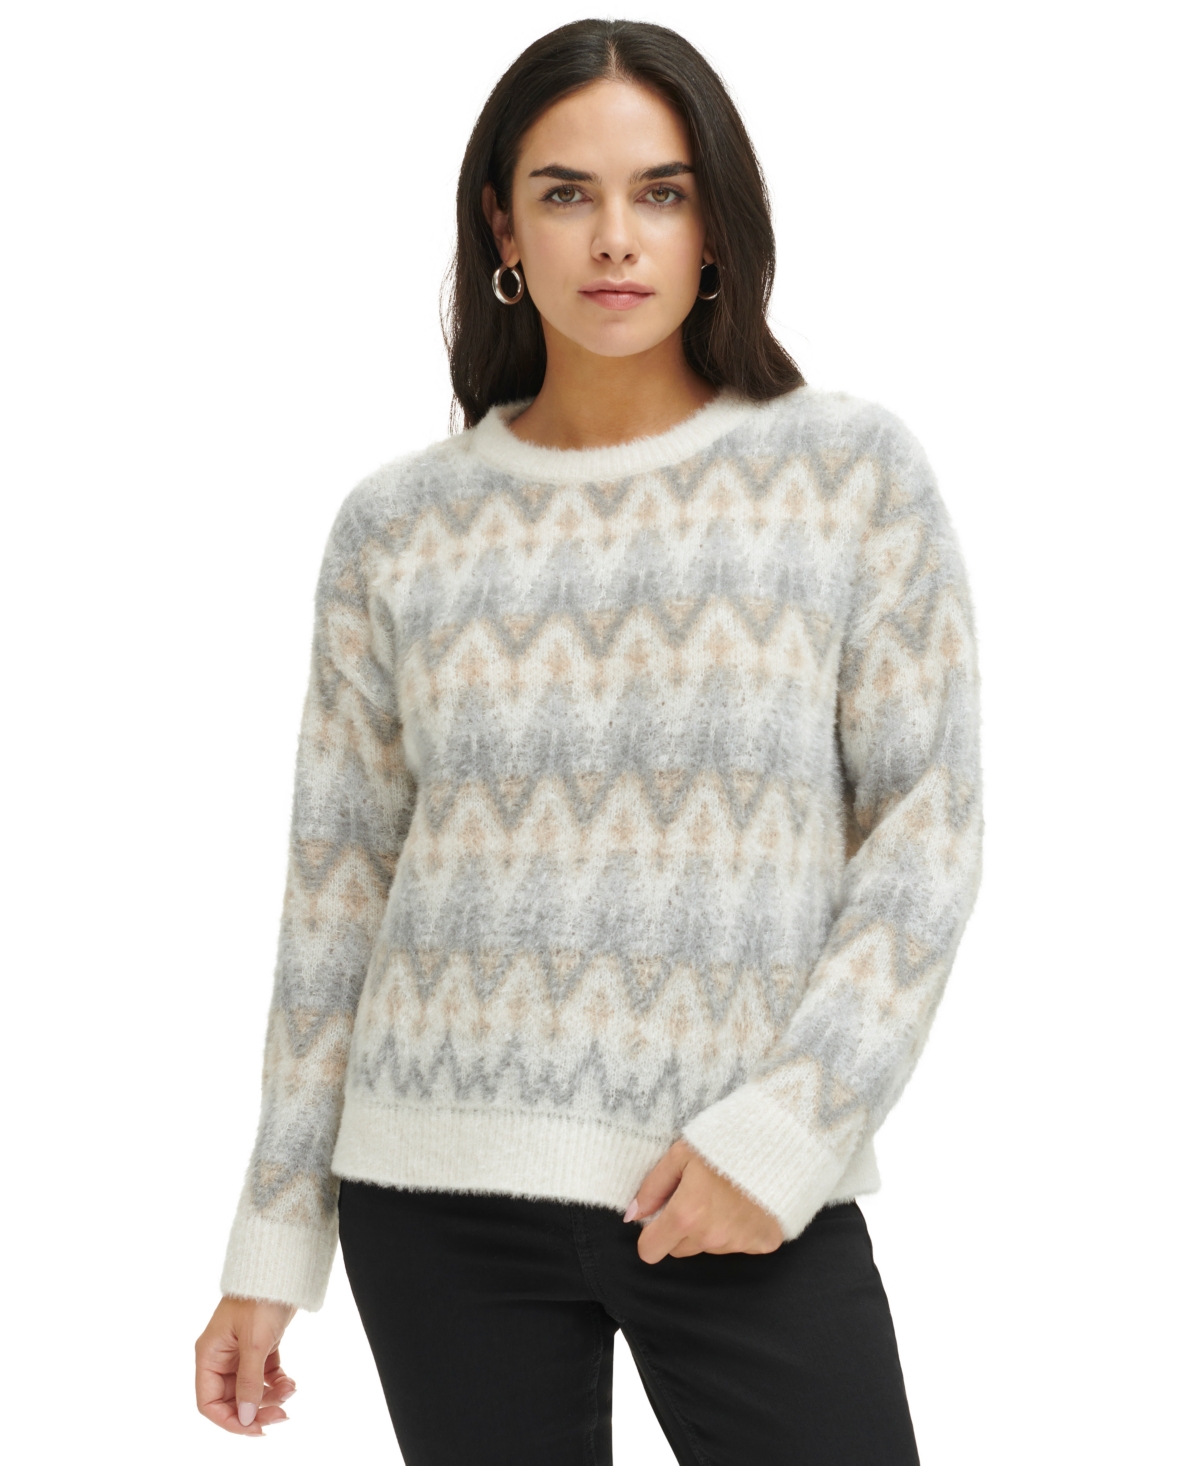 Calvin Klein Women's Uplift Wool Knit Crewneck Sweater - Orange - M